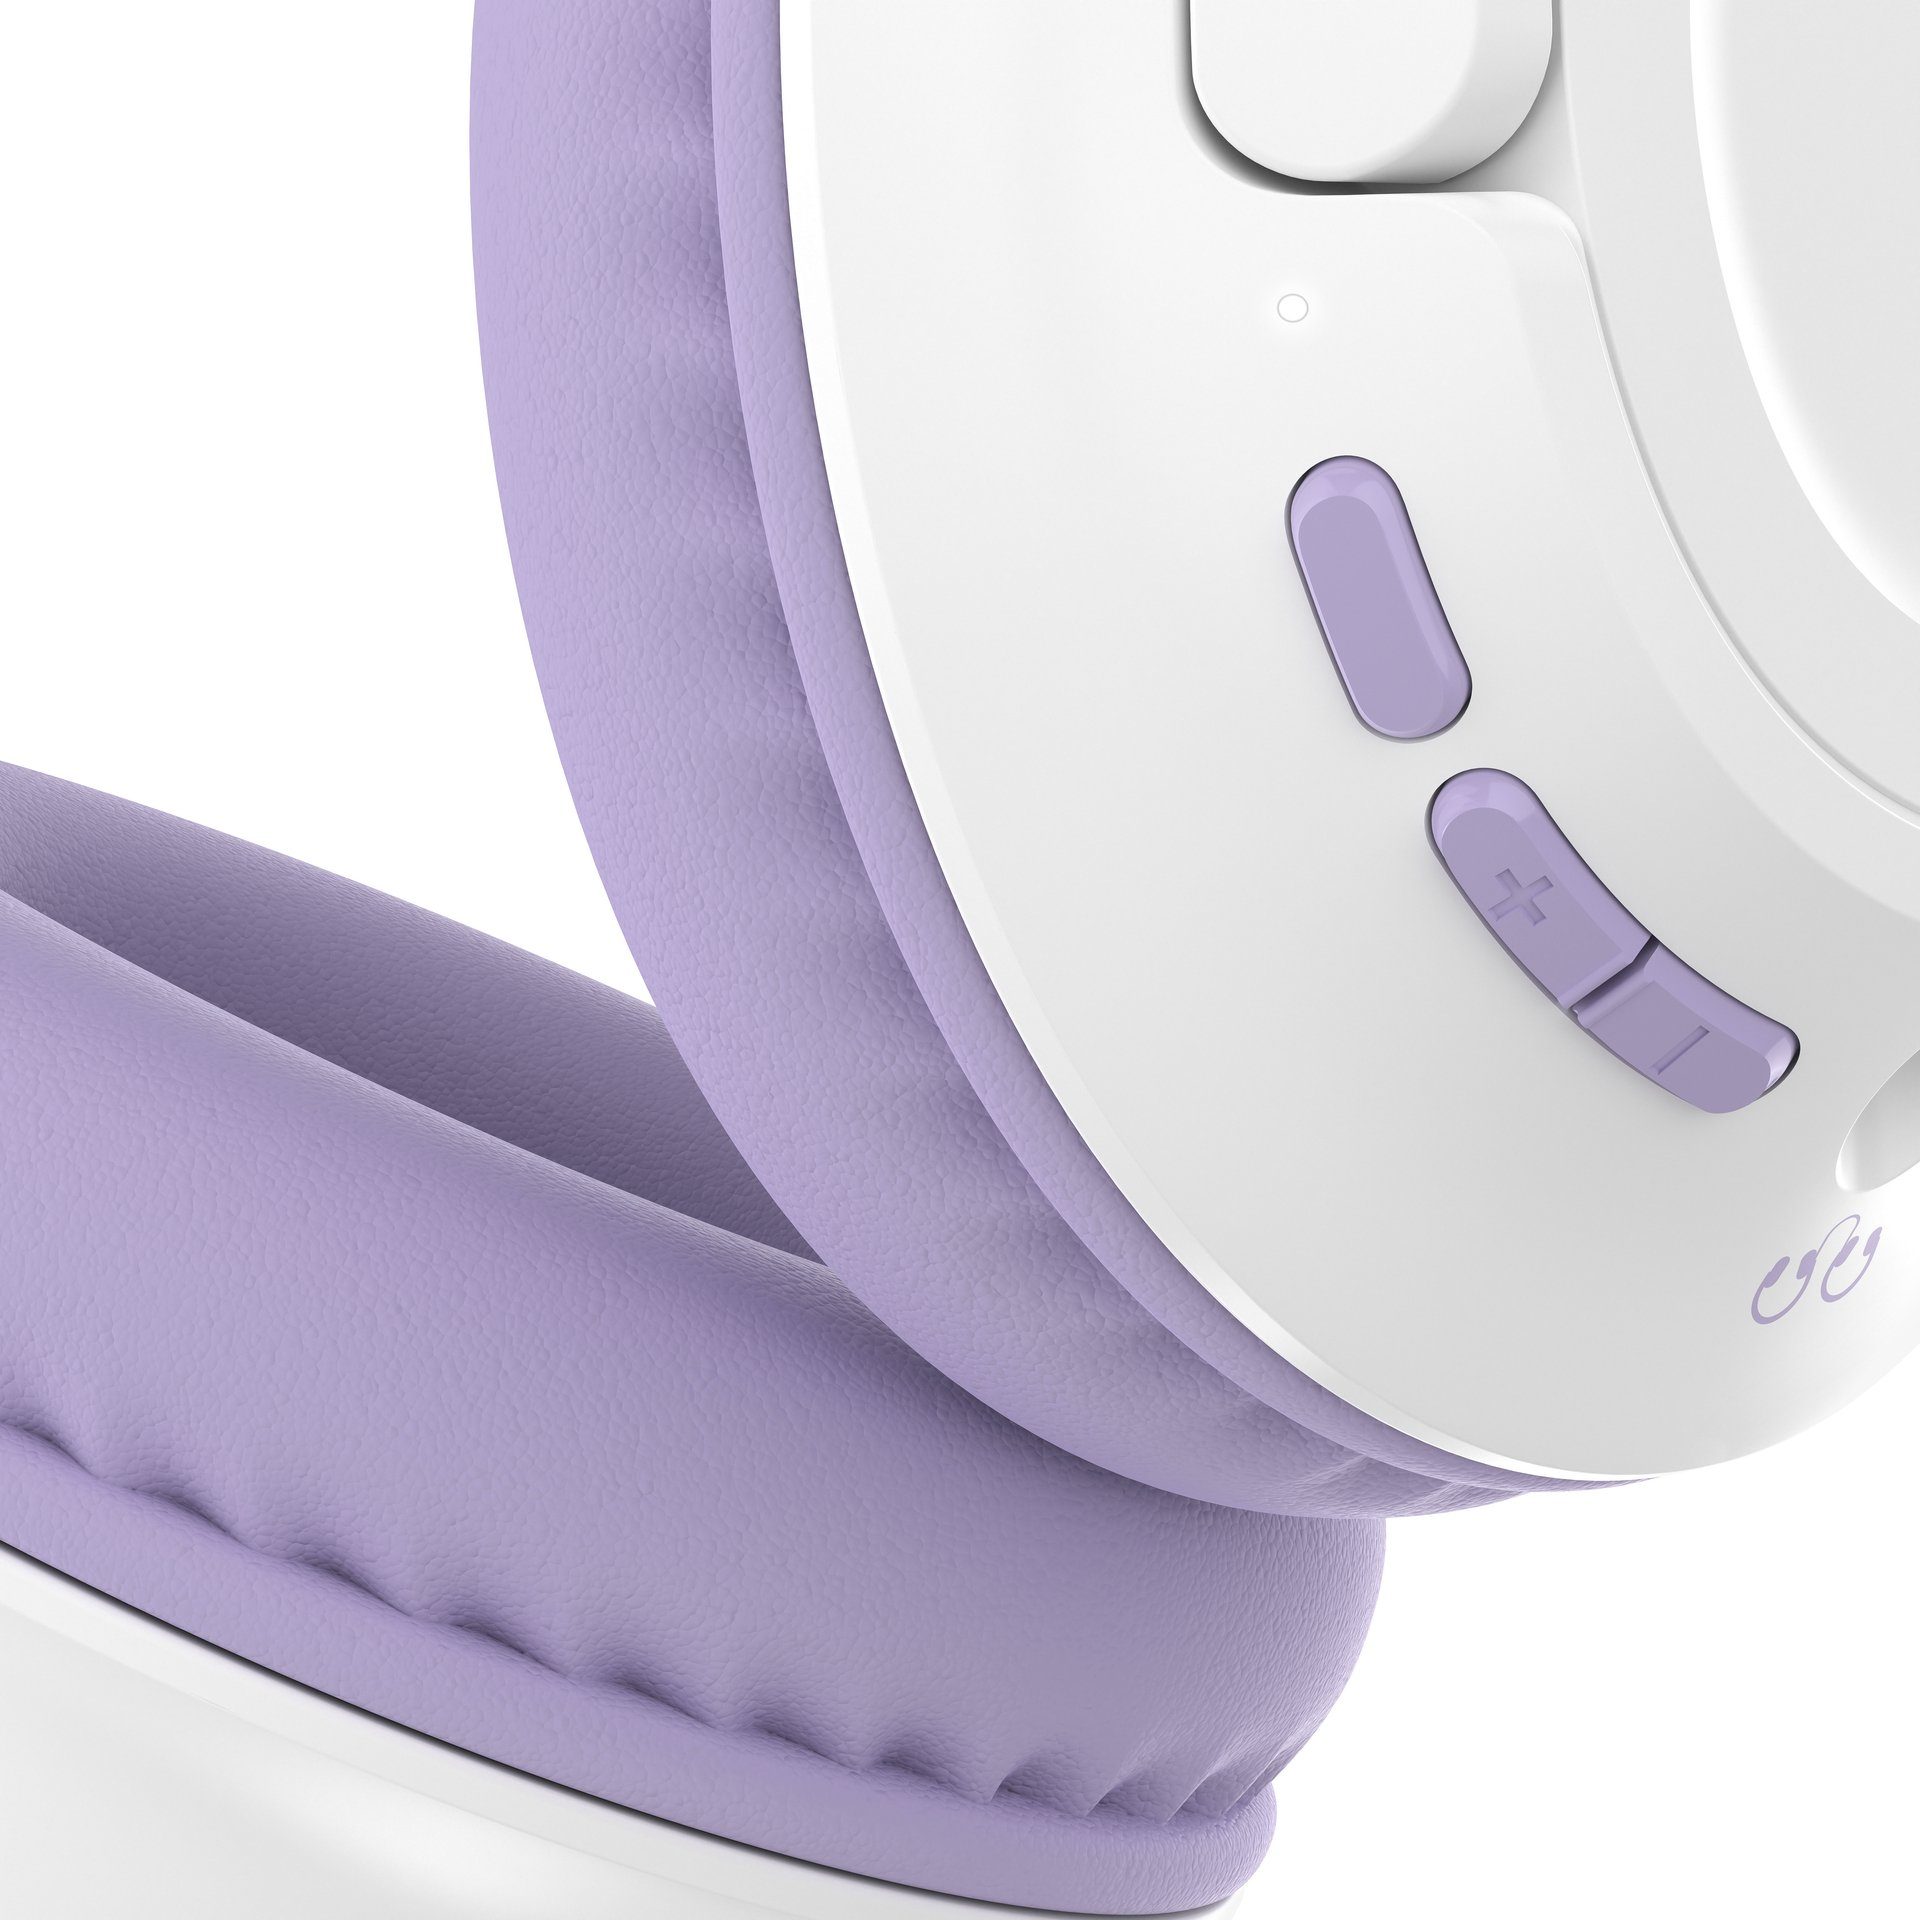 INSPIRE Weiß/Lavendel Kinder-Kopfhörer Belkin wireless Kopfhörer Over-Ear (Stummschaltung) BT SOUNDFORM